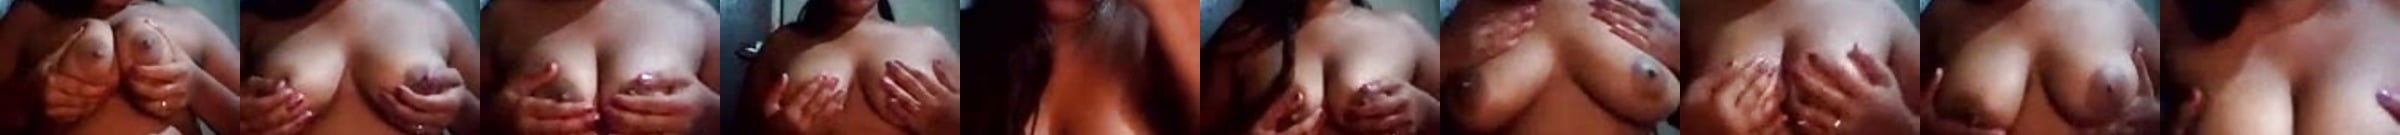 Malayalam Porn Videos Xhamster